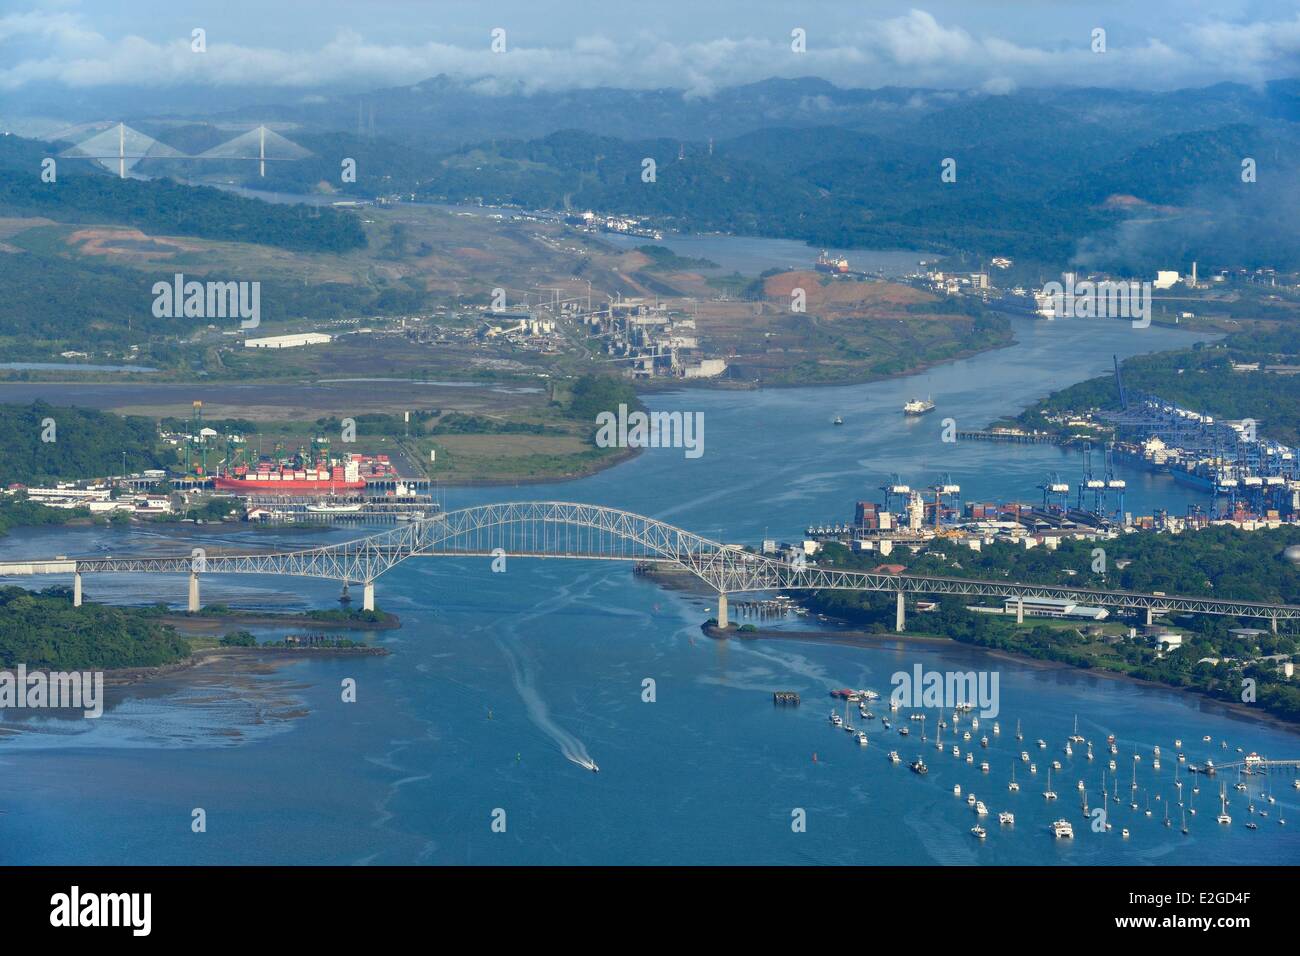 Panama Panama City Bridge of Americas (Puente de Las Americas) über Panamakanal Zufahrtskanal am Pazifik Seite Miraflores Schleusen im Hintergrund (Luftbild) Stockfoto